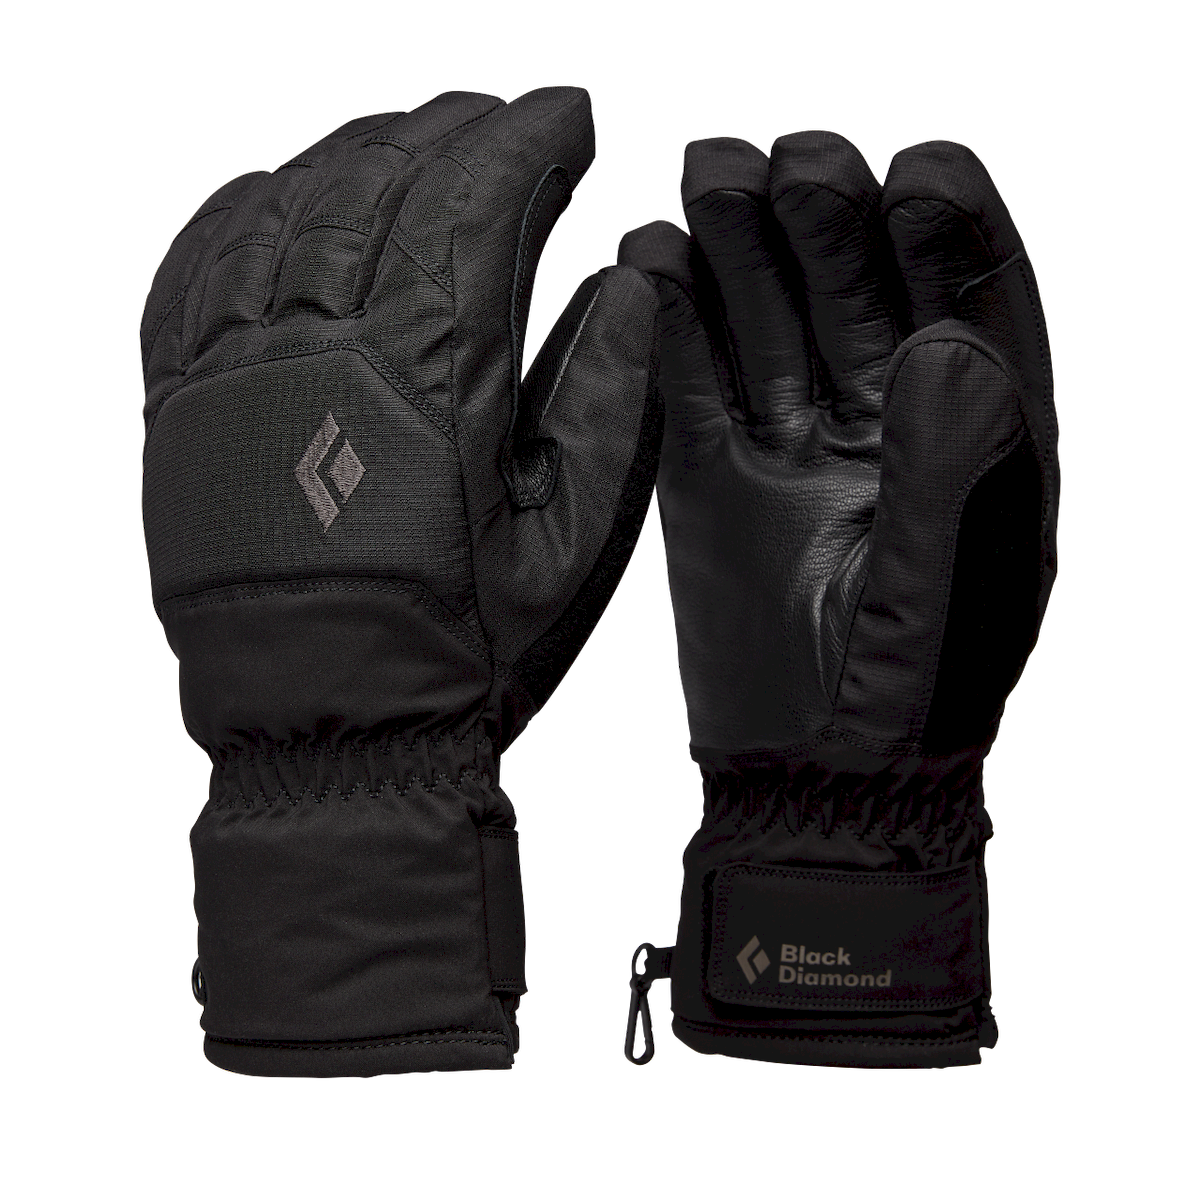 Black Diamond Mission MX Gloves - Skidhandskar